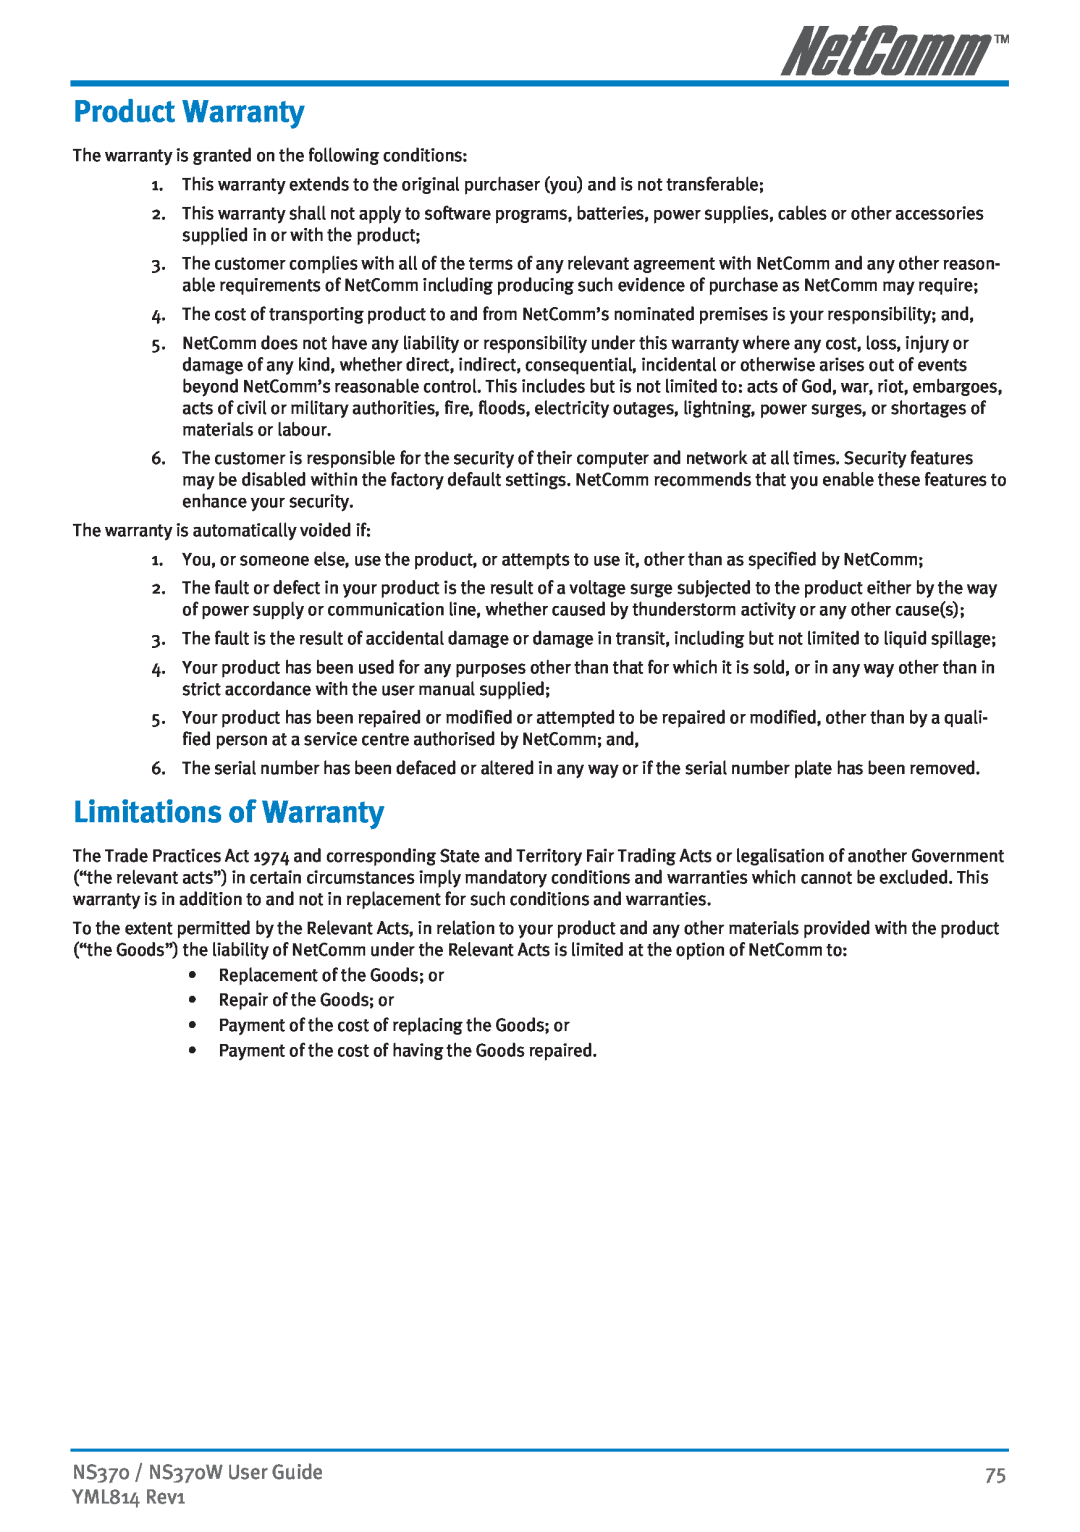 NetComm manual Product Warranty, Limitations of Warranty, NS370 / NS370W User Guide, YML814 Rev1 